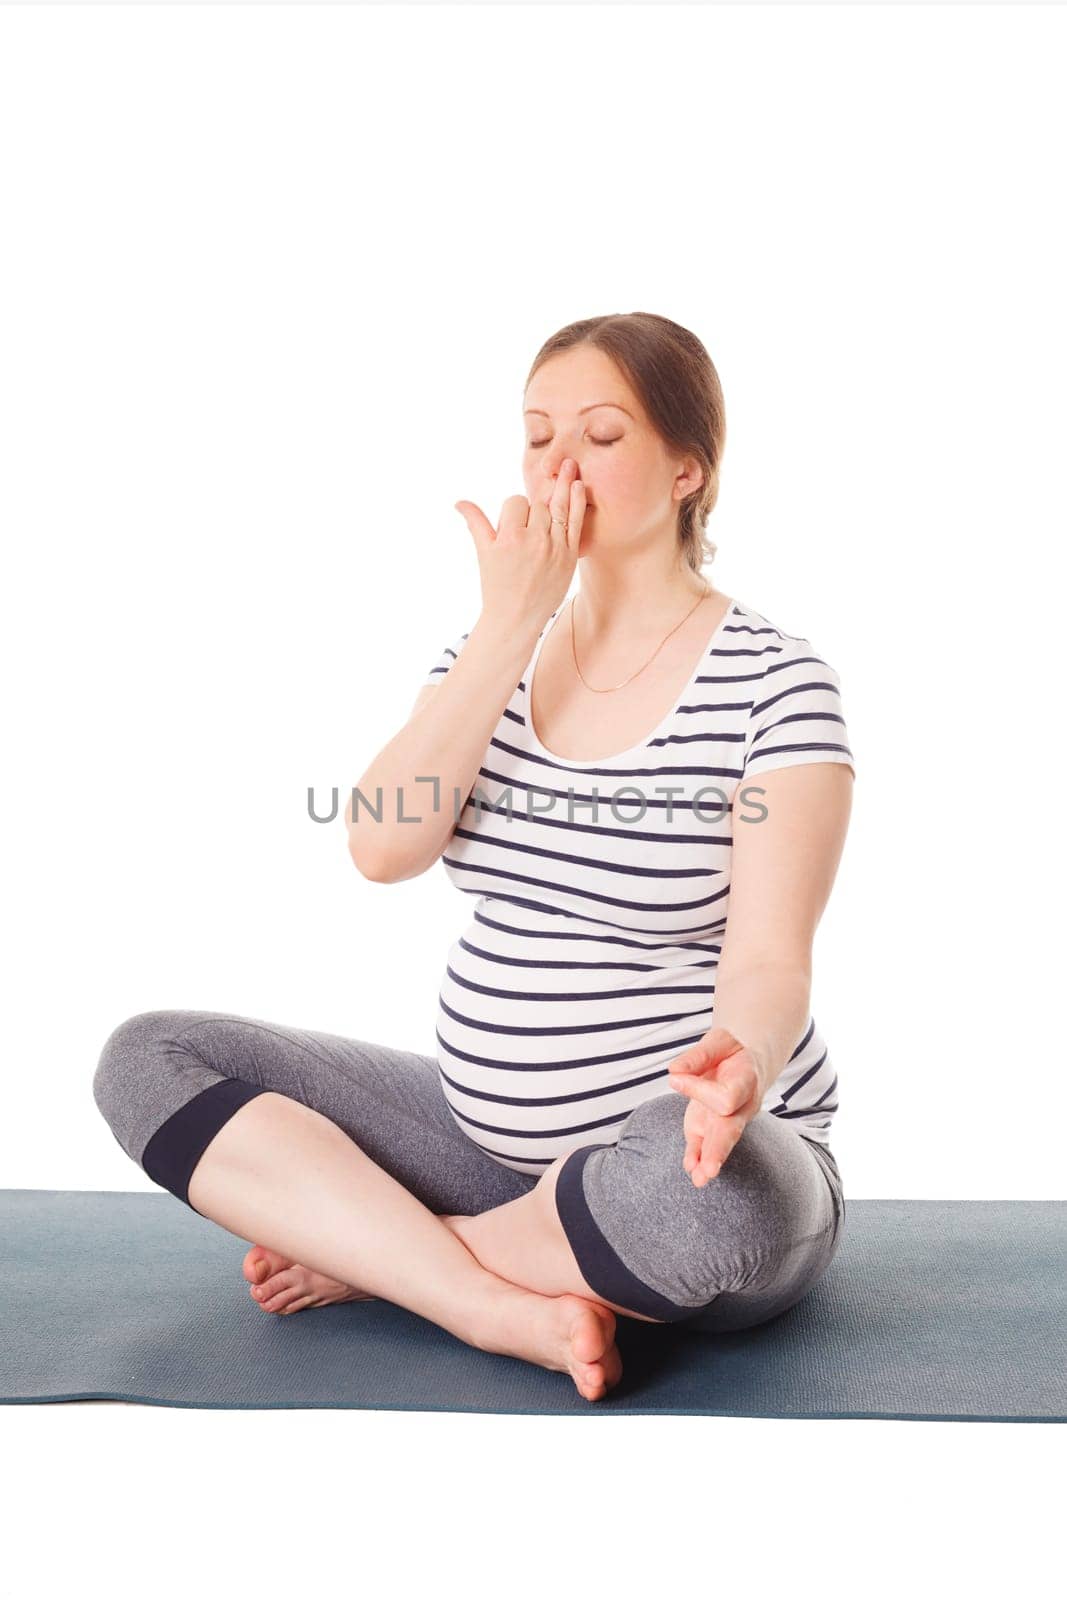 Pregnant woman doing yoga breathing exercise Pranayama by dimol